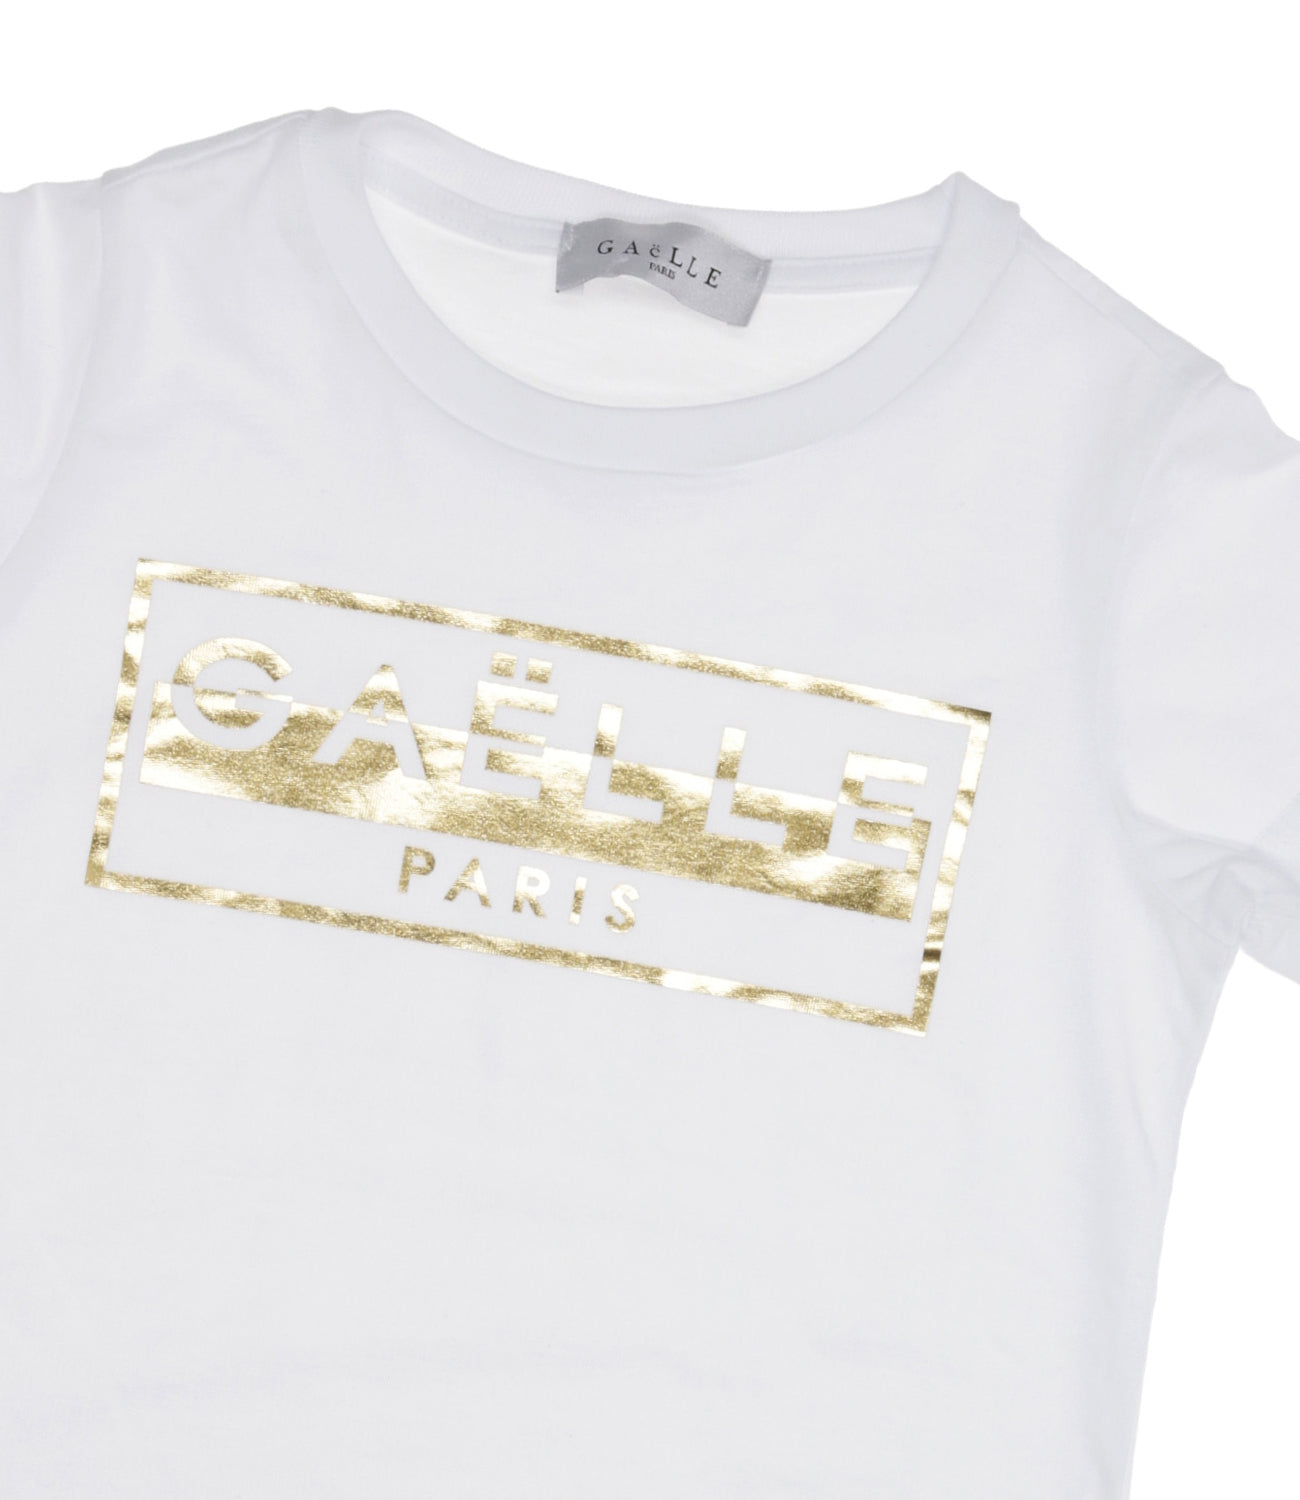 Gaelle Paris Kids | T-Shirt Bianco ottico